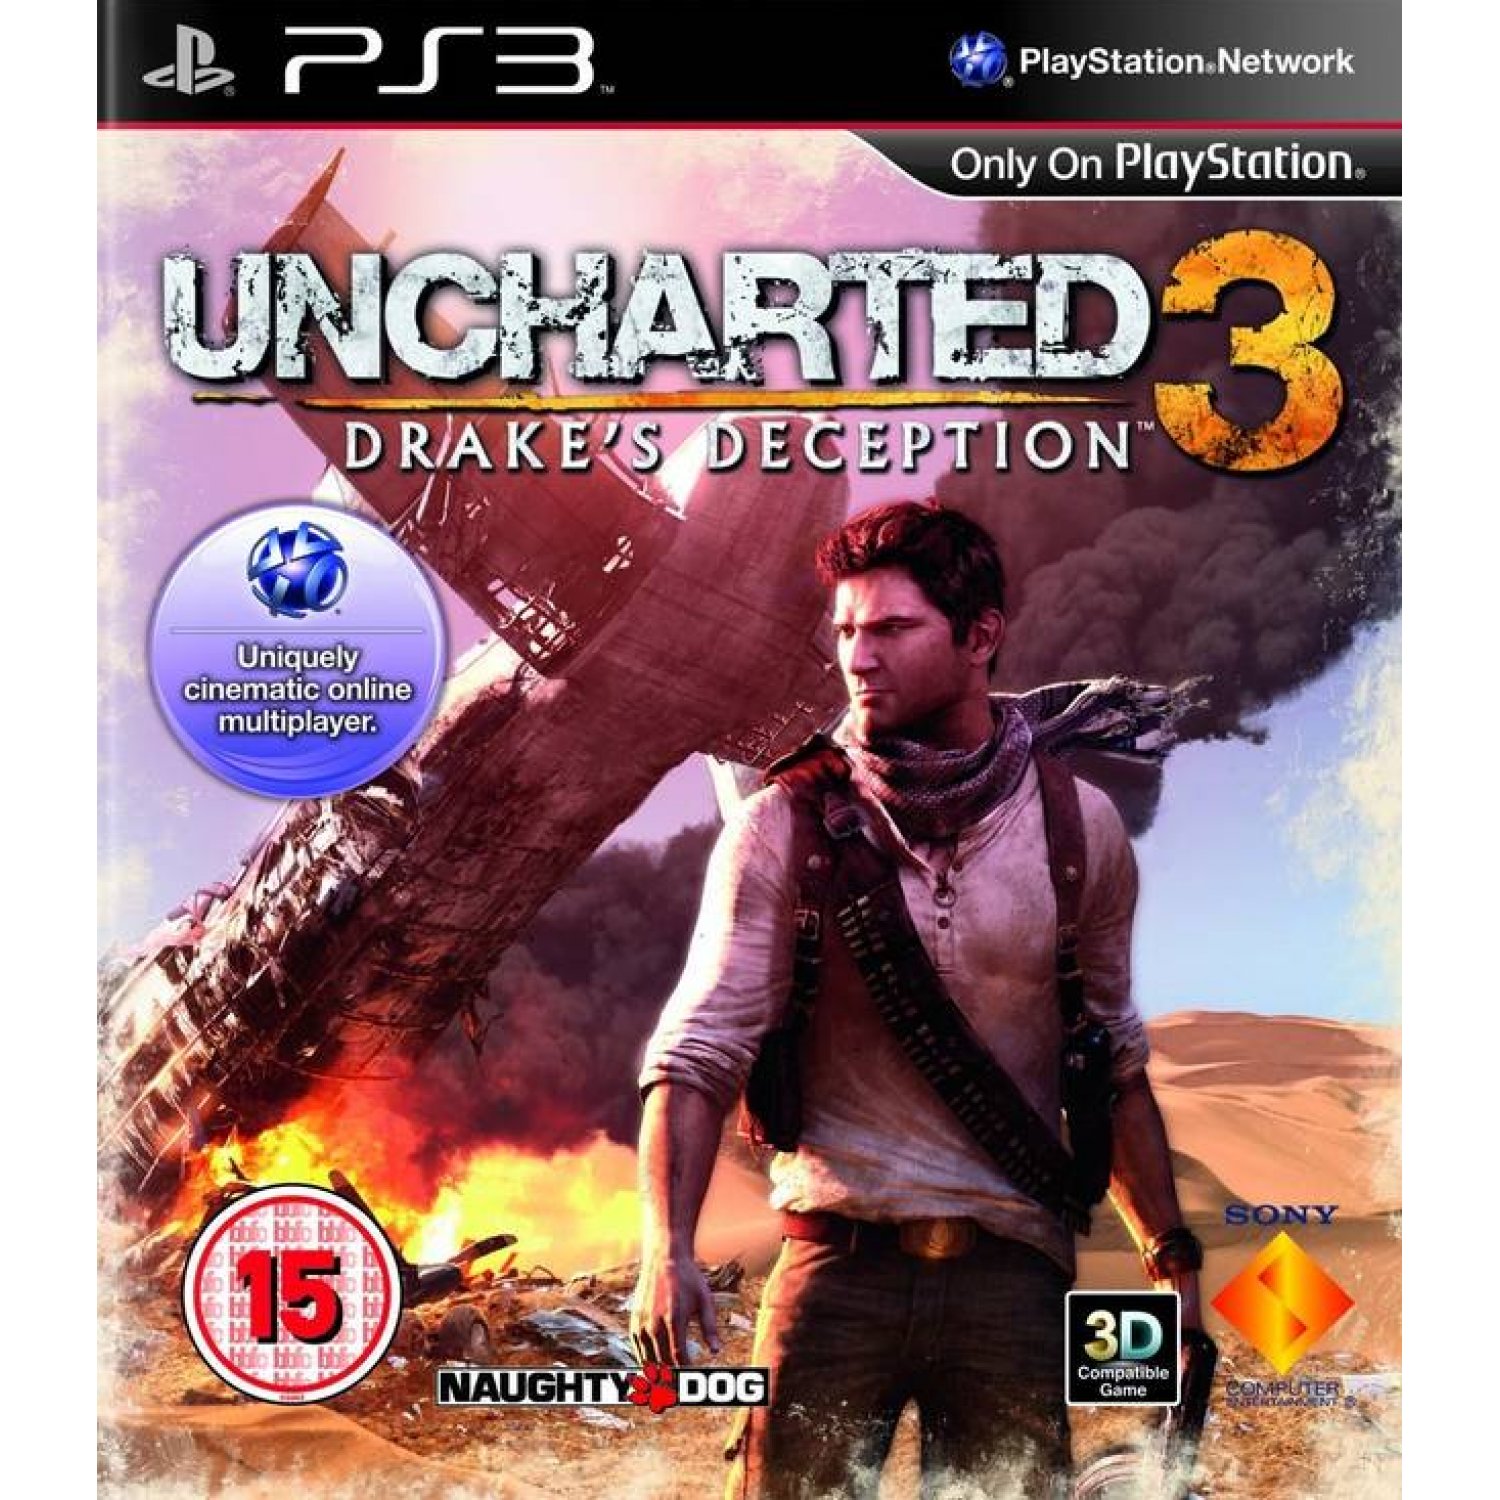 Ps3 игры 5. Игра ps3 Uncharted 3: Drake’s Deception диск. Uncharted 3 иллюзии Дрейка ps3. Обложка пс3 анчартед. Анчартед 3 диск пс3.